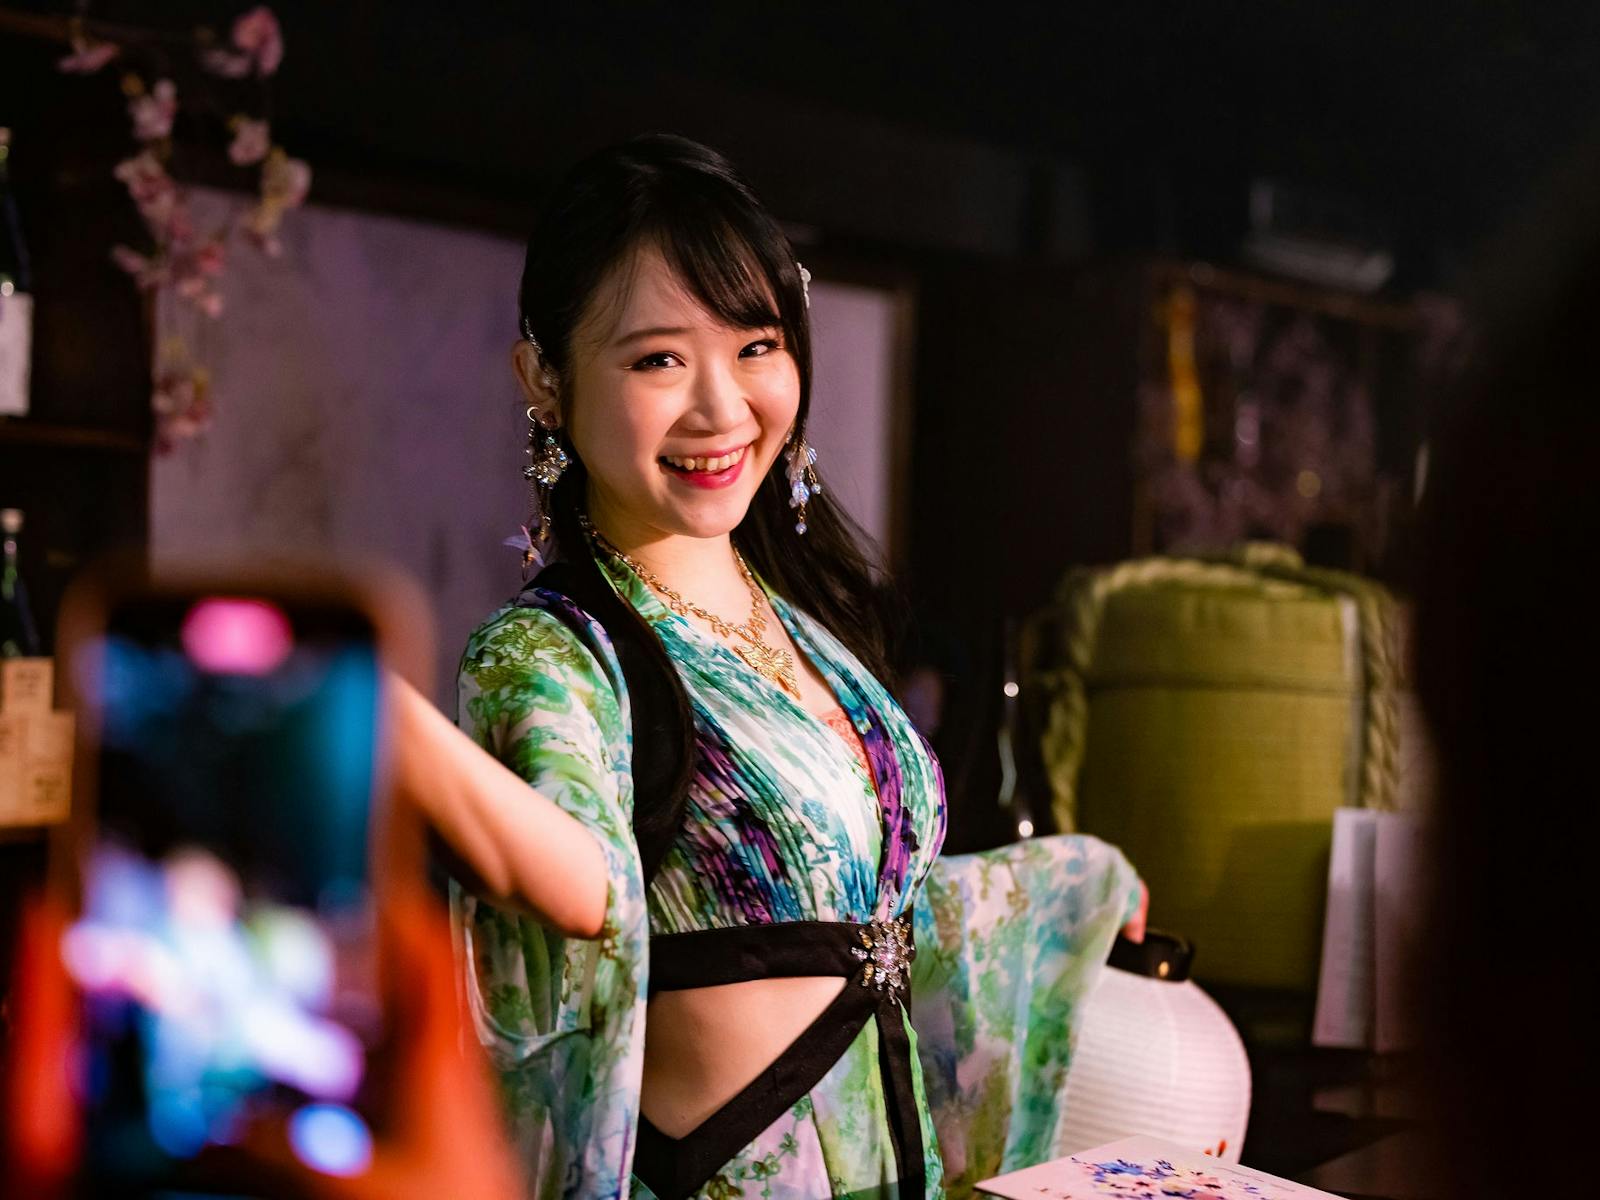 Japanese magician in green kimono smiles at the camera